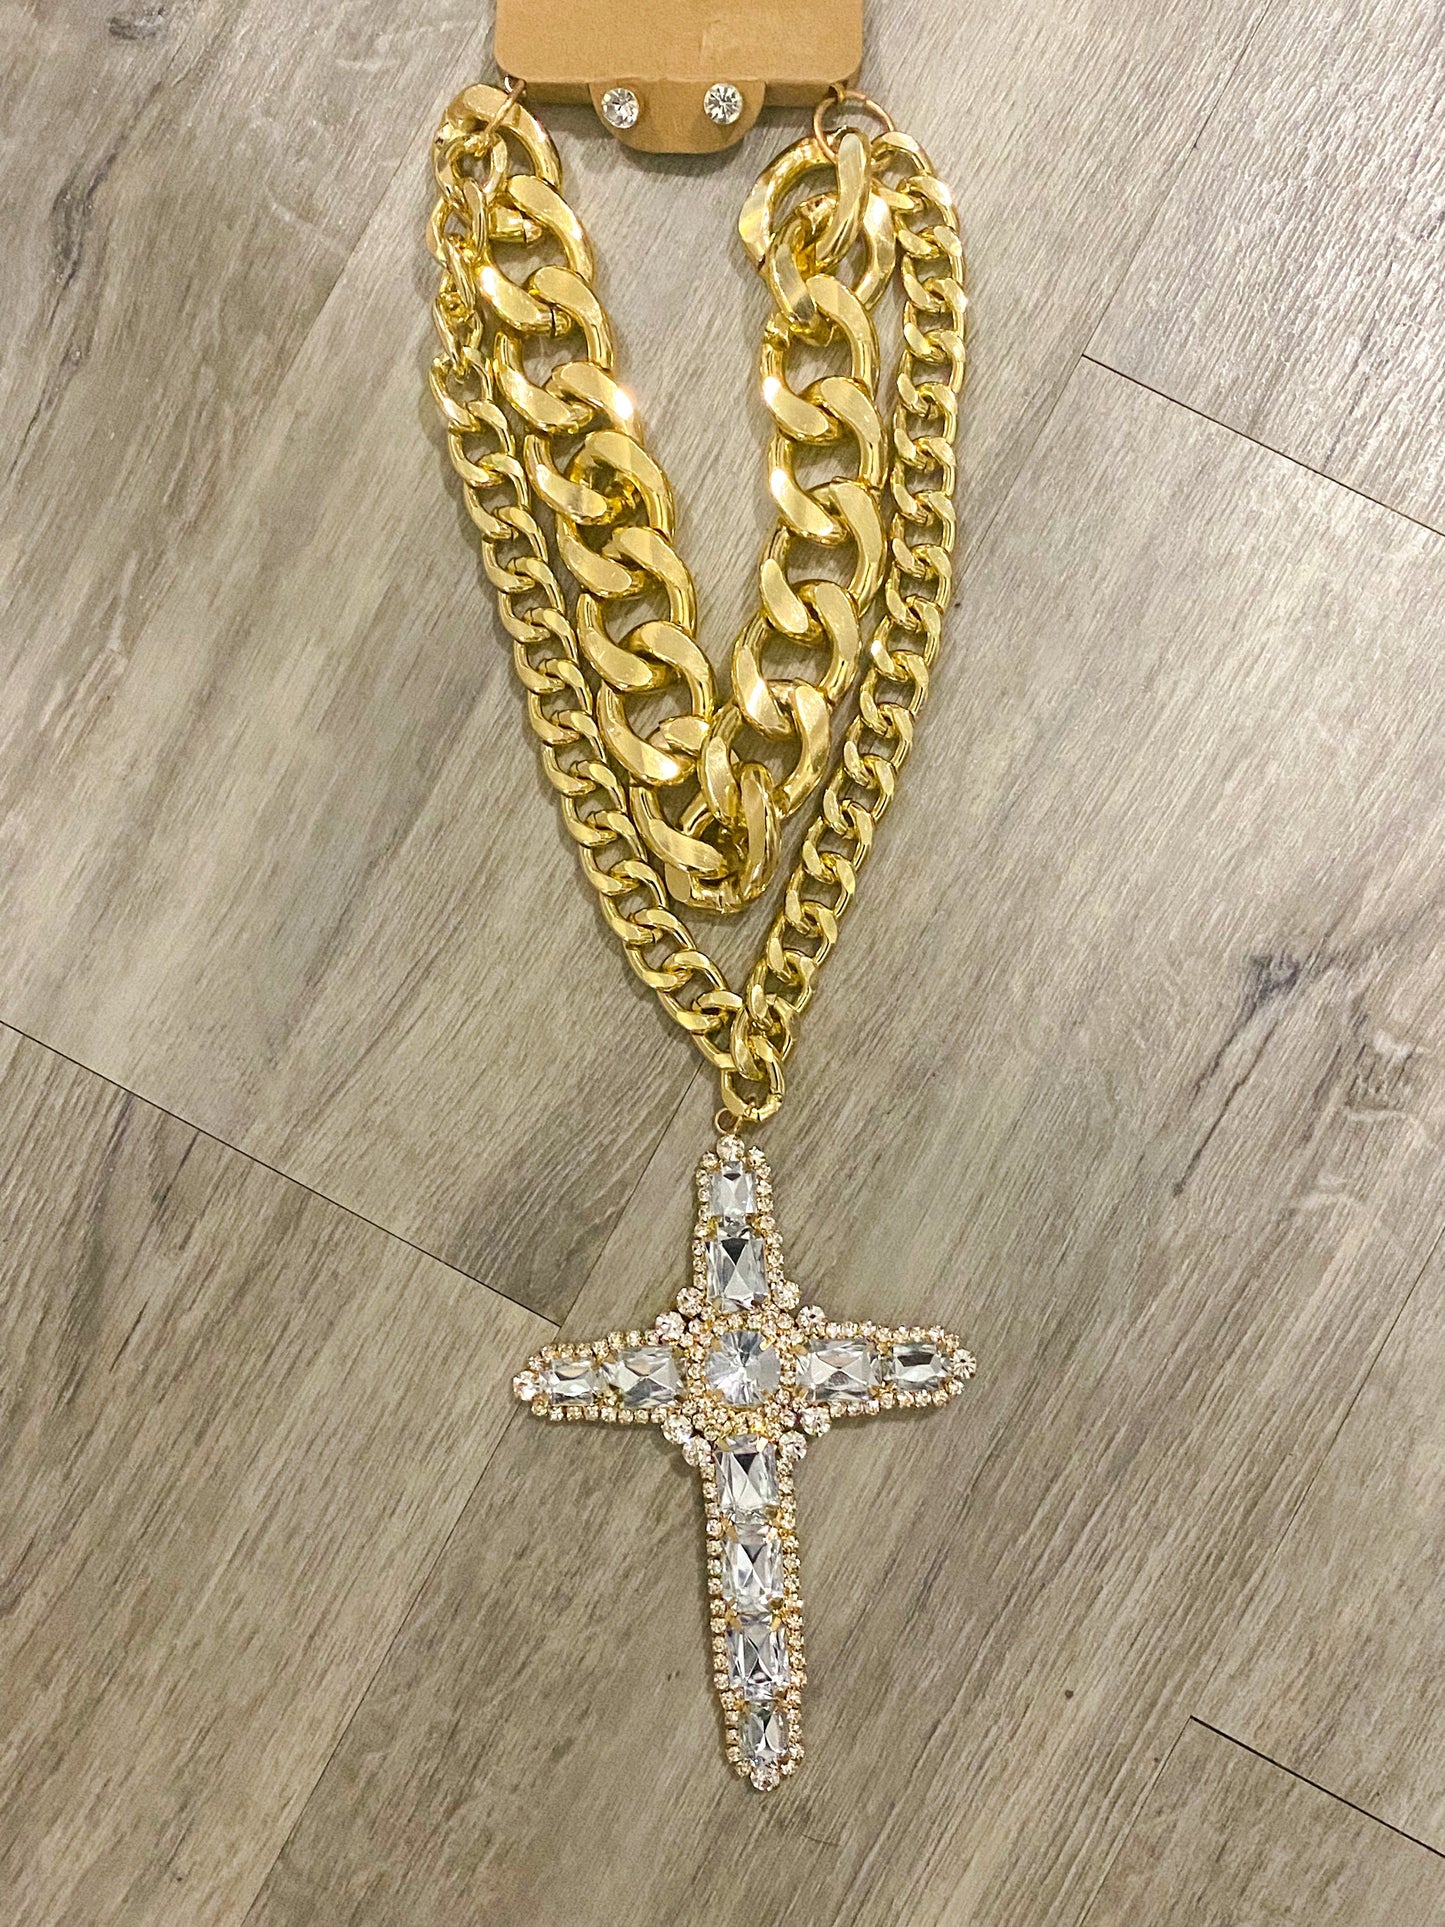 Gaudy Cross Necklace